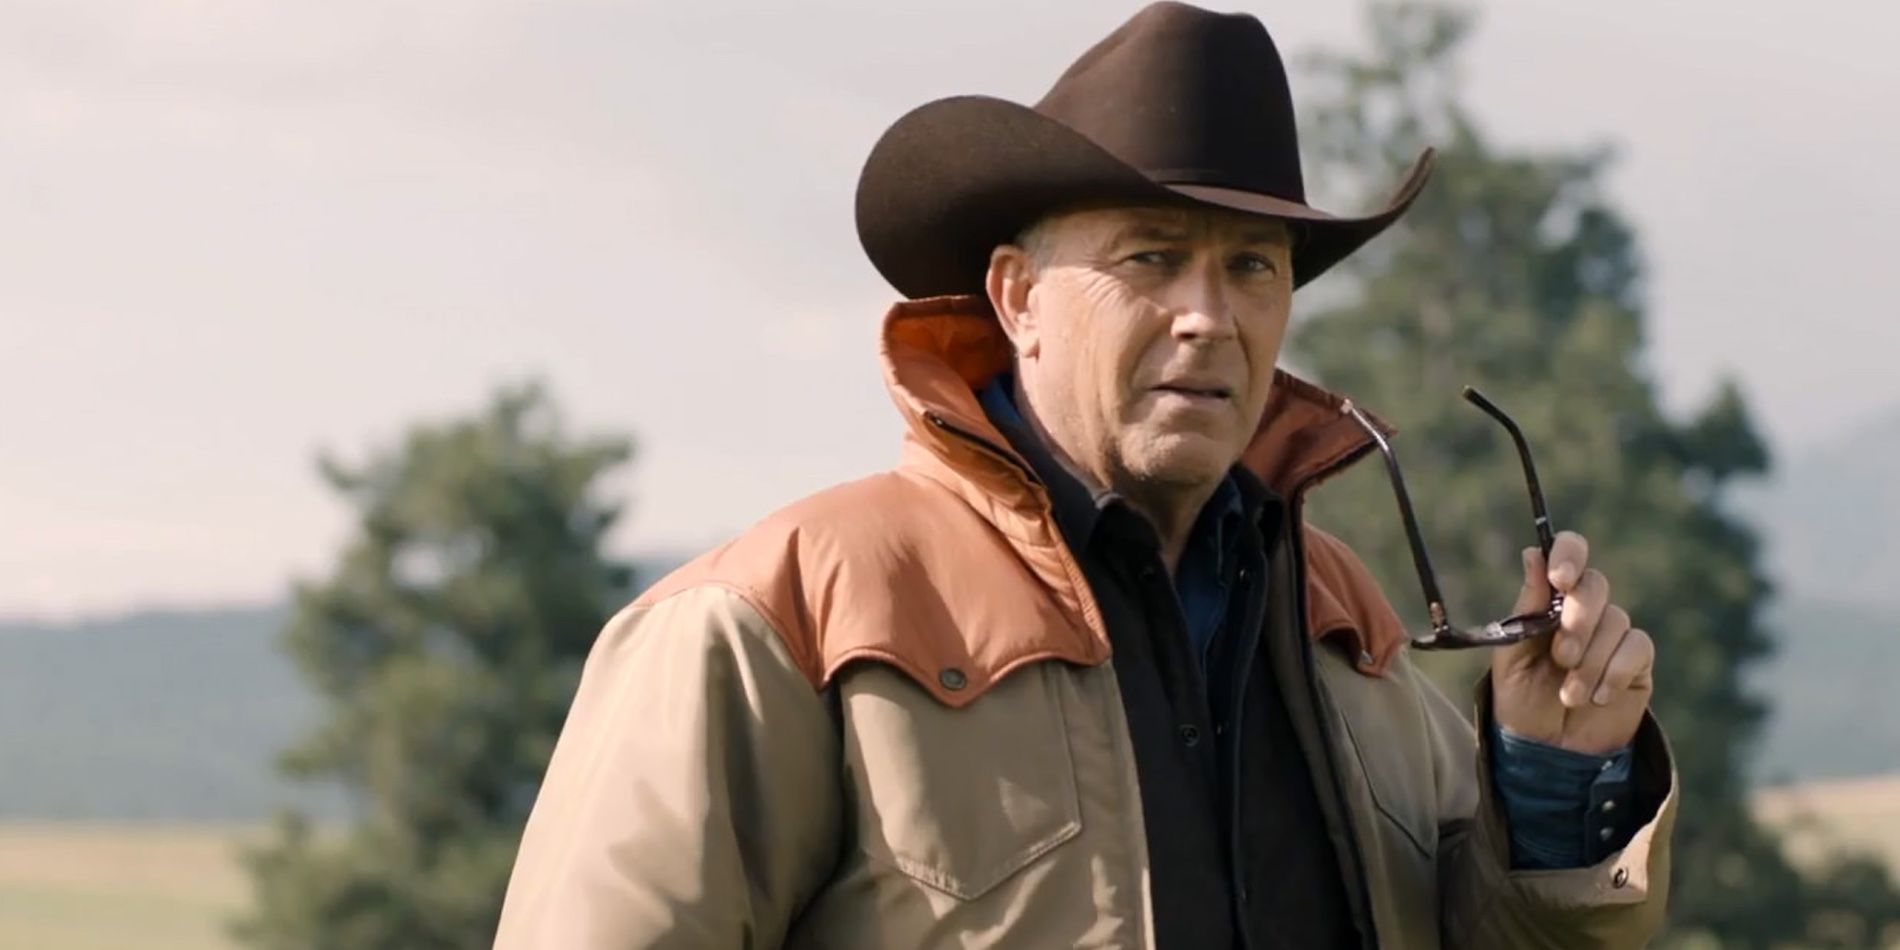 Kevin Costner de Yellowstone gana $ 1.2 millones por episodio